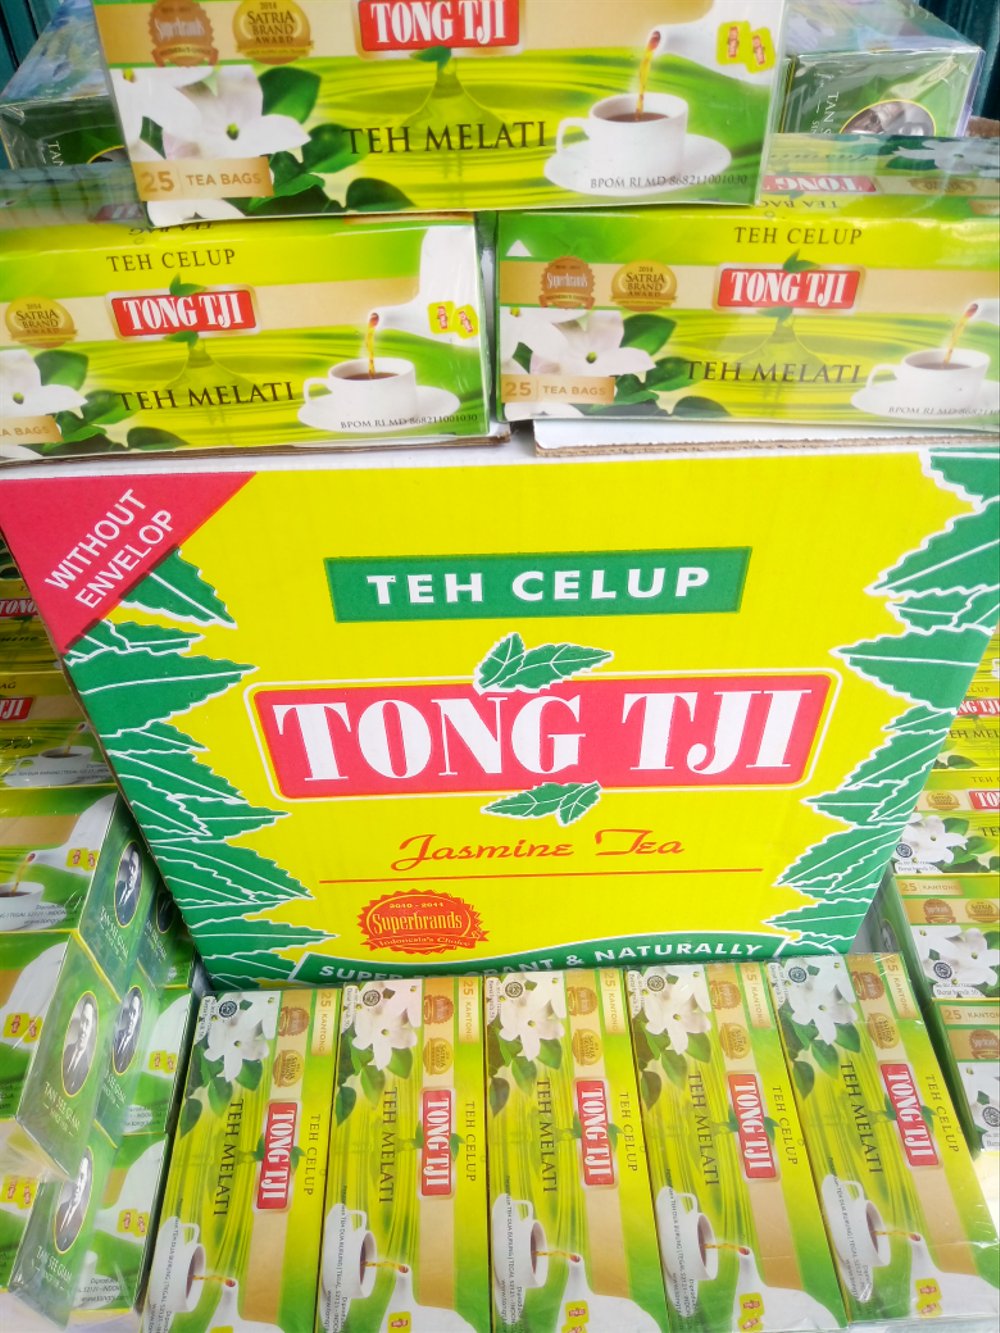 Teh Celup Tong Tji